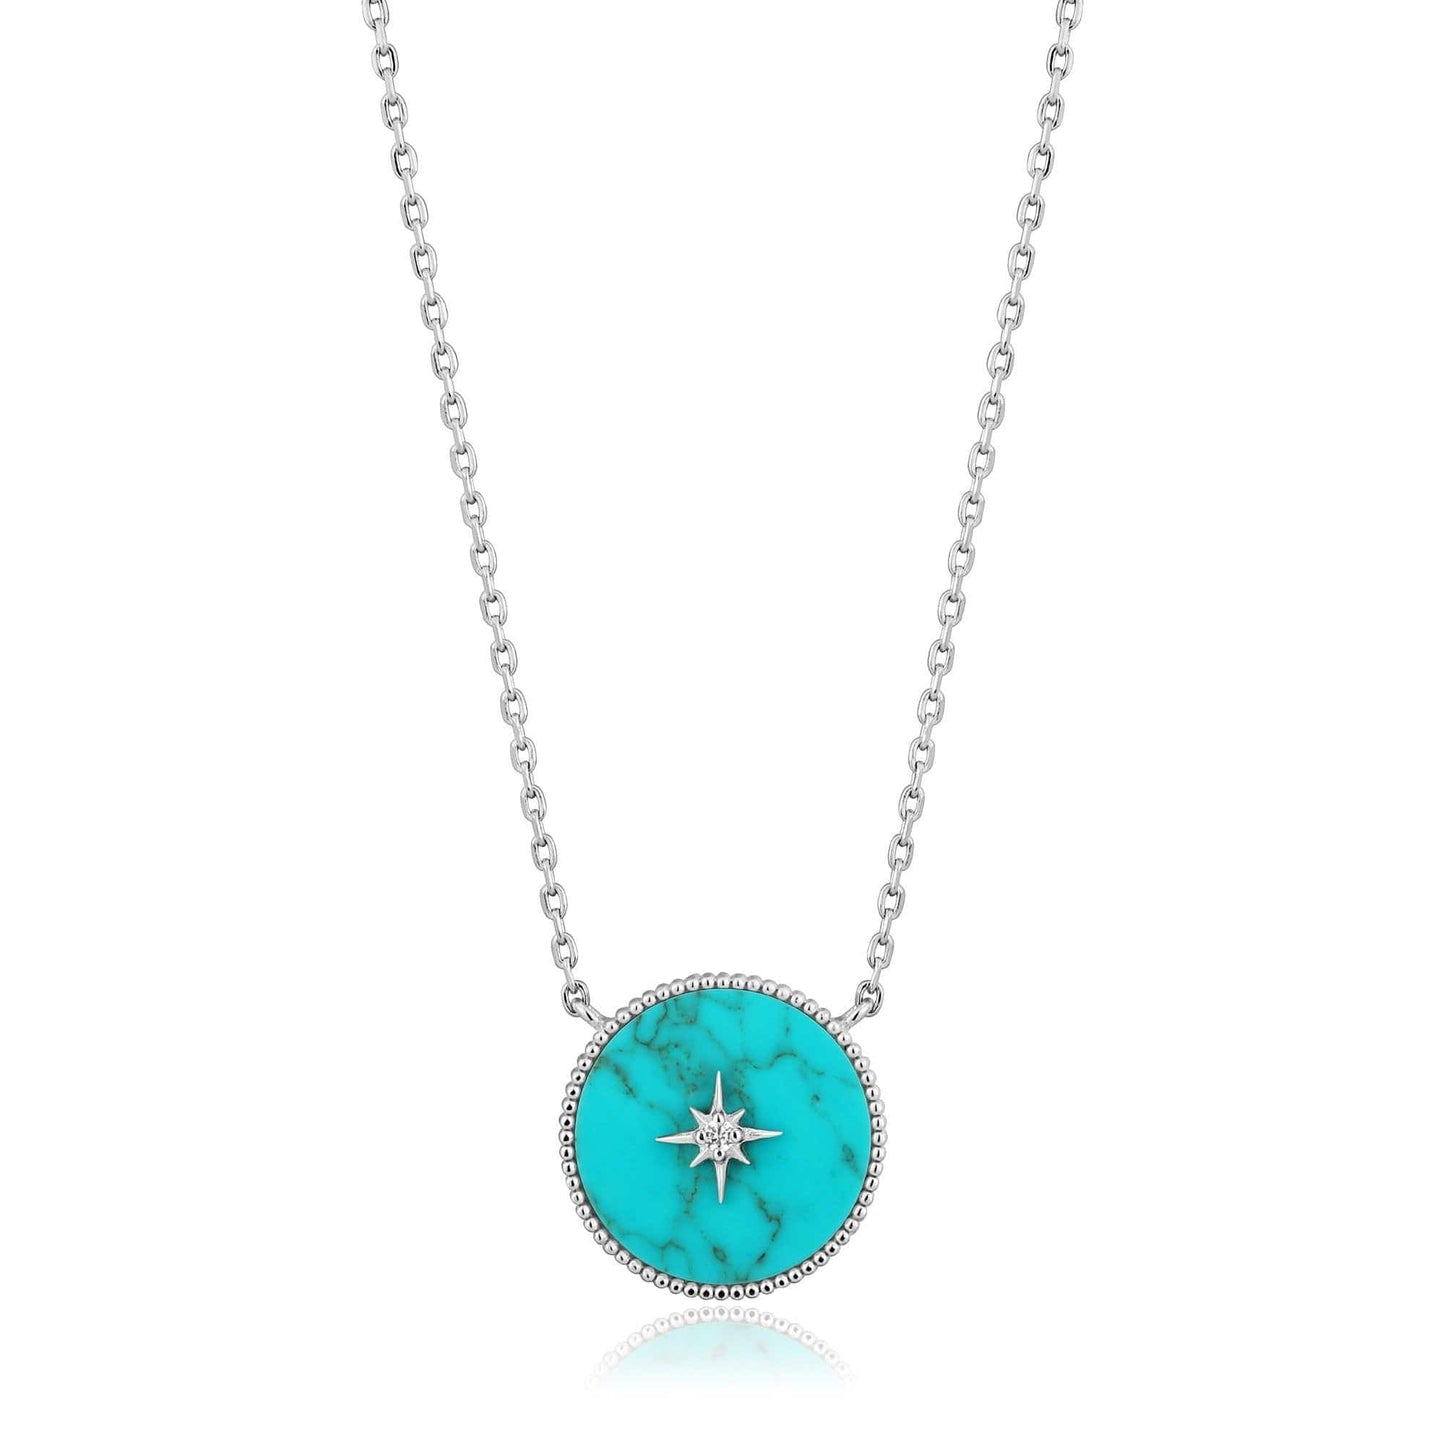 NKL Silver Turquoise Emblem Necklace